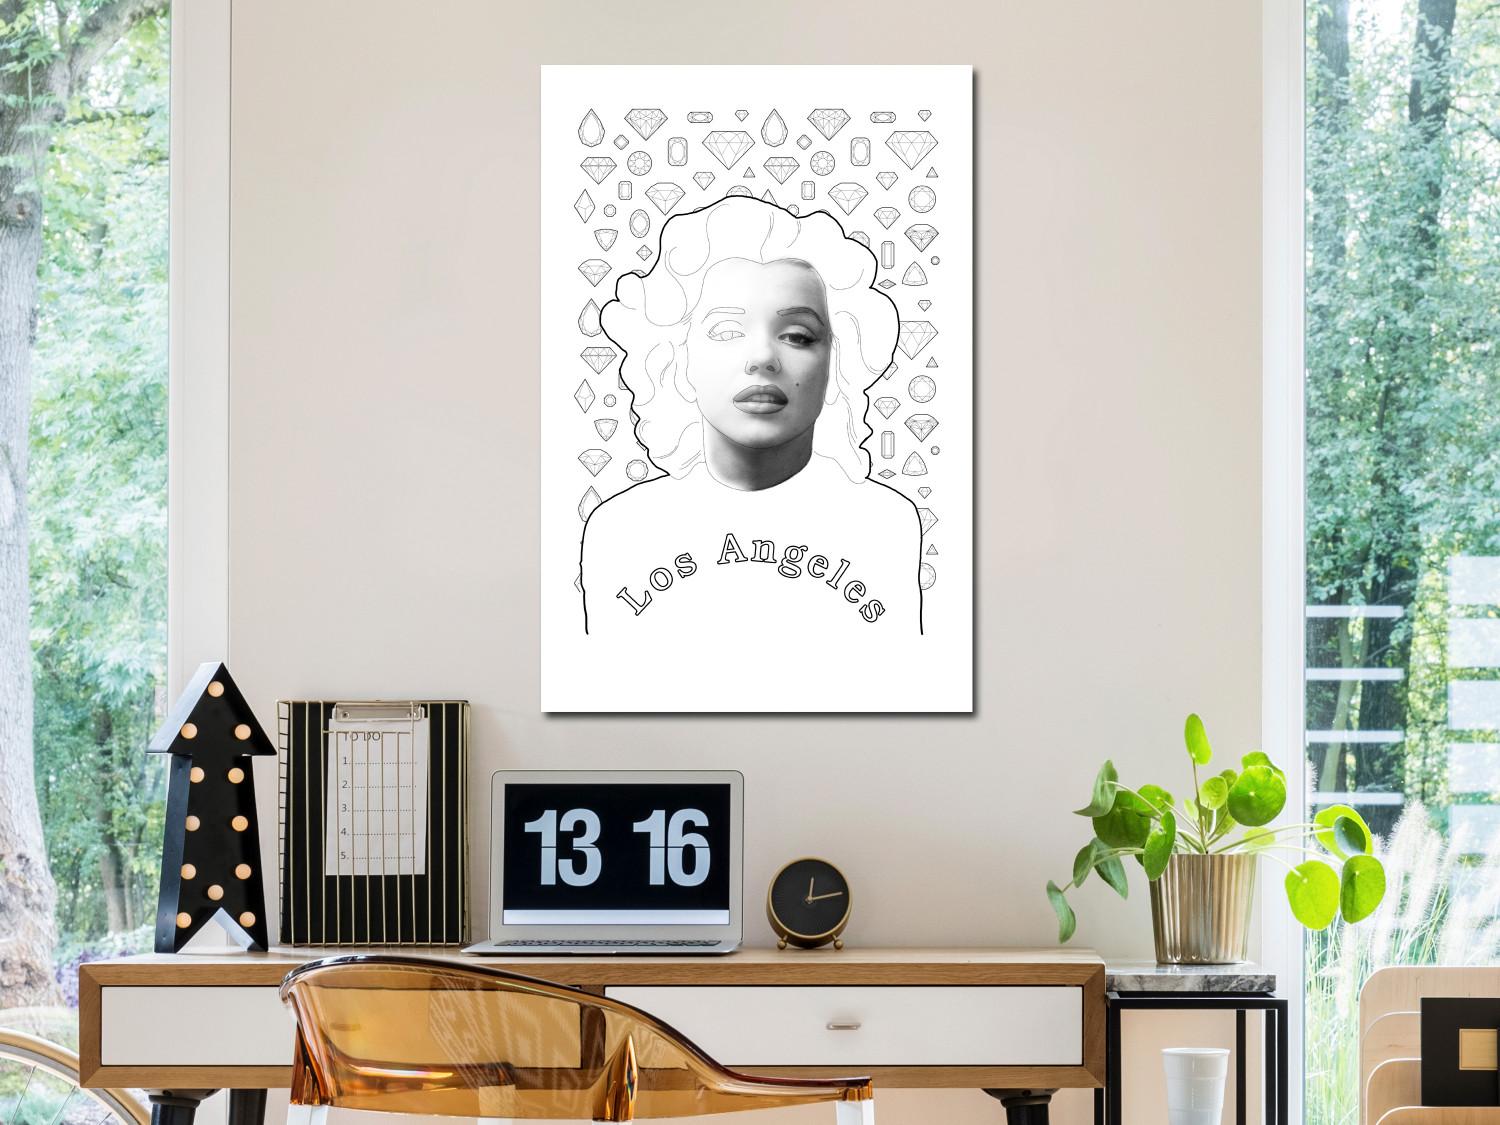 Canvas Marylin Monroe - LA pop art star on a diamond background